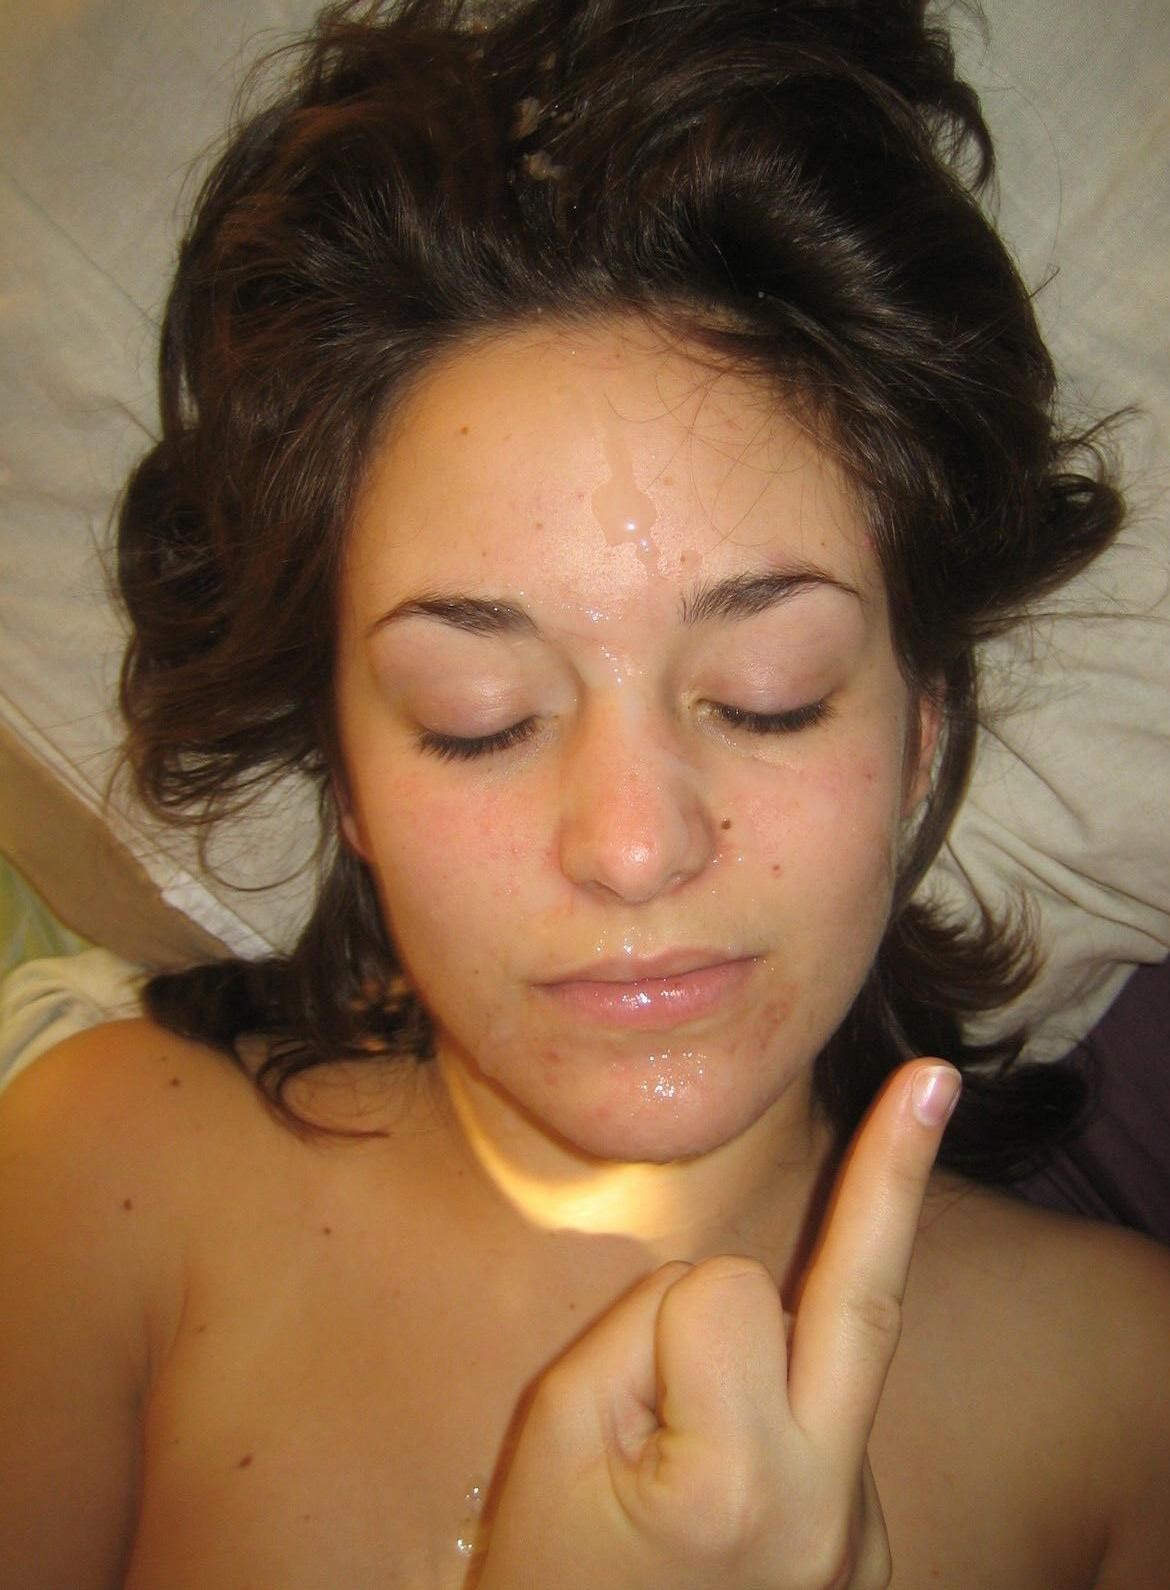 Middle finger facial cumshot (36 pictures)